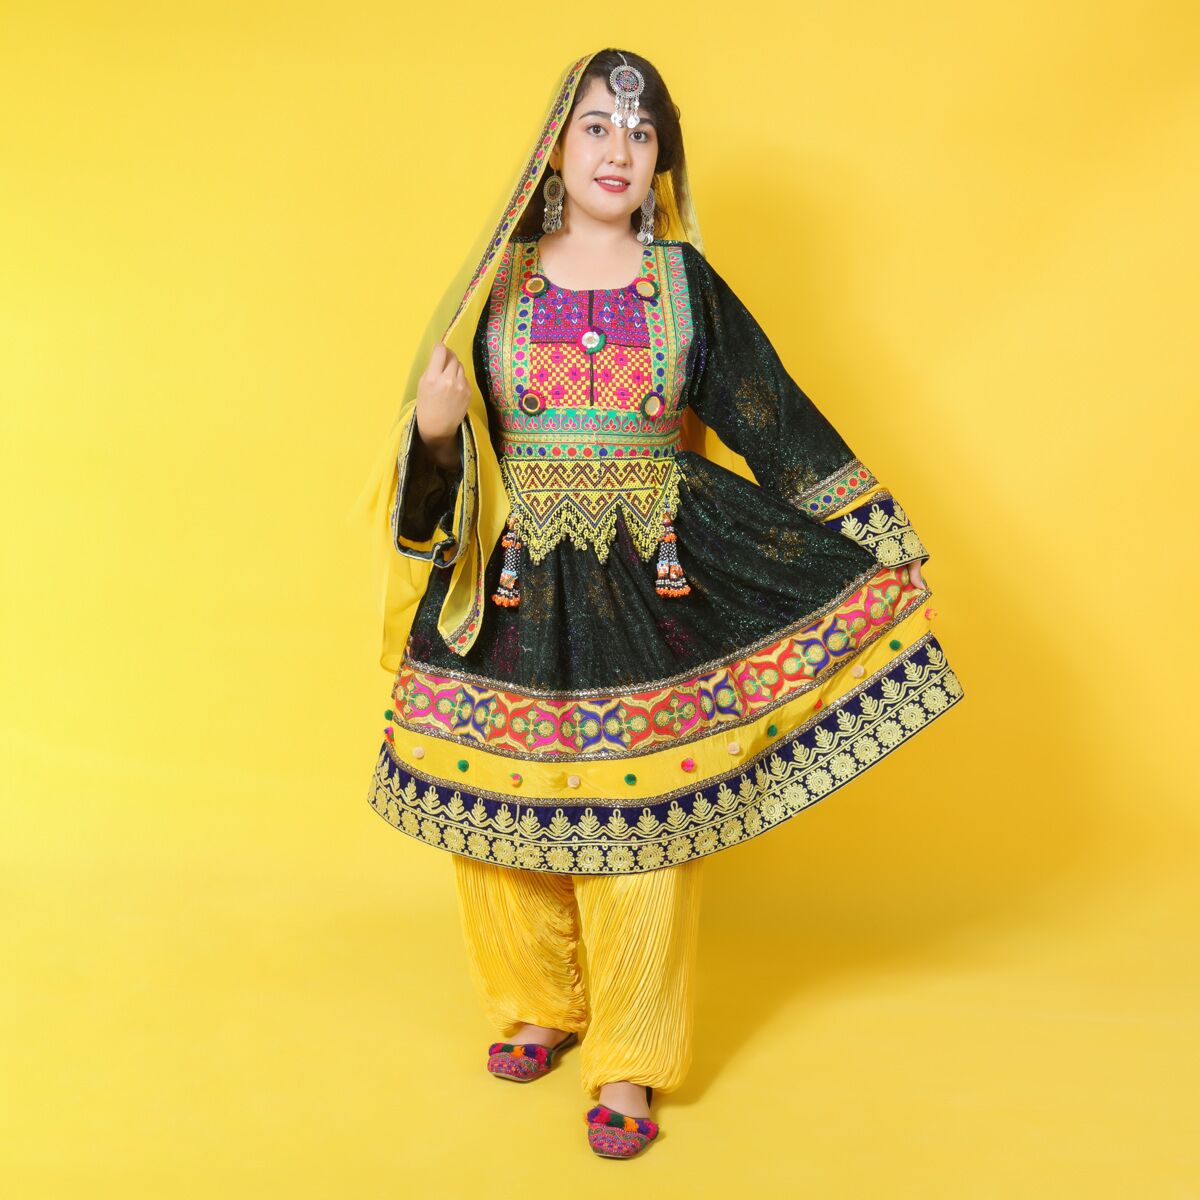 Afghan dress Afghan handmade traditional clothes | eBay